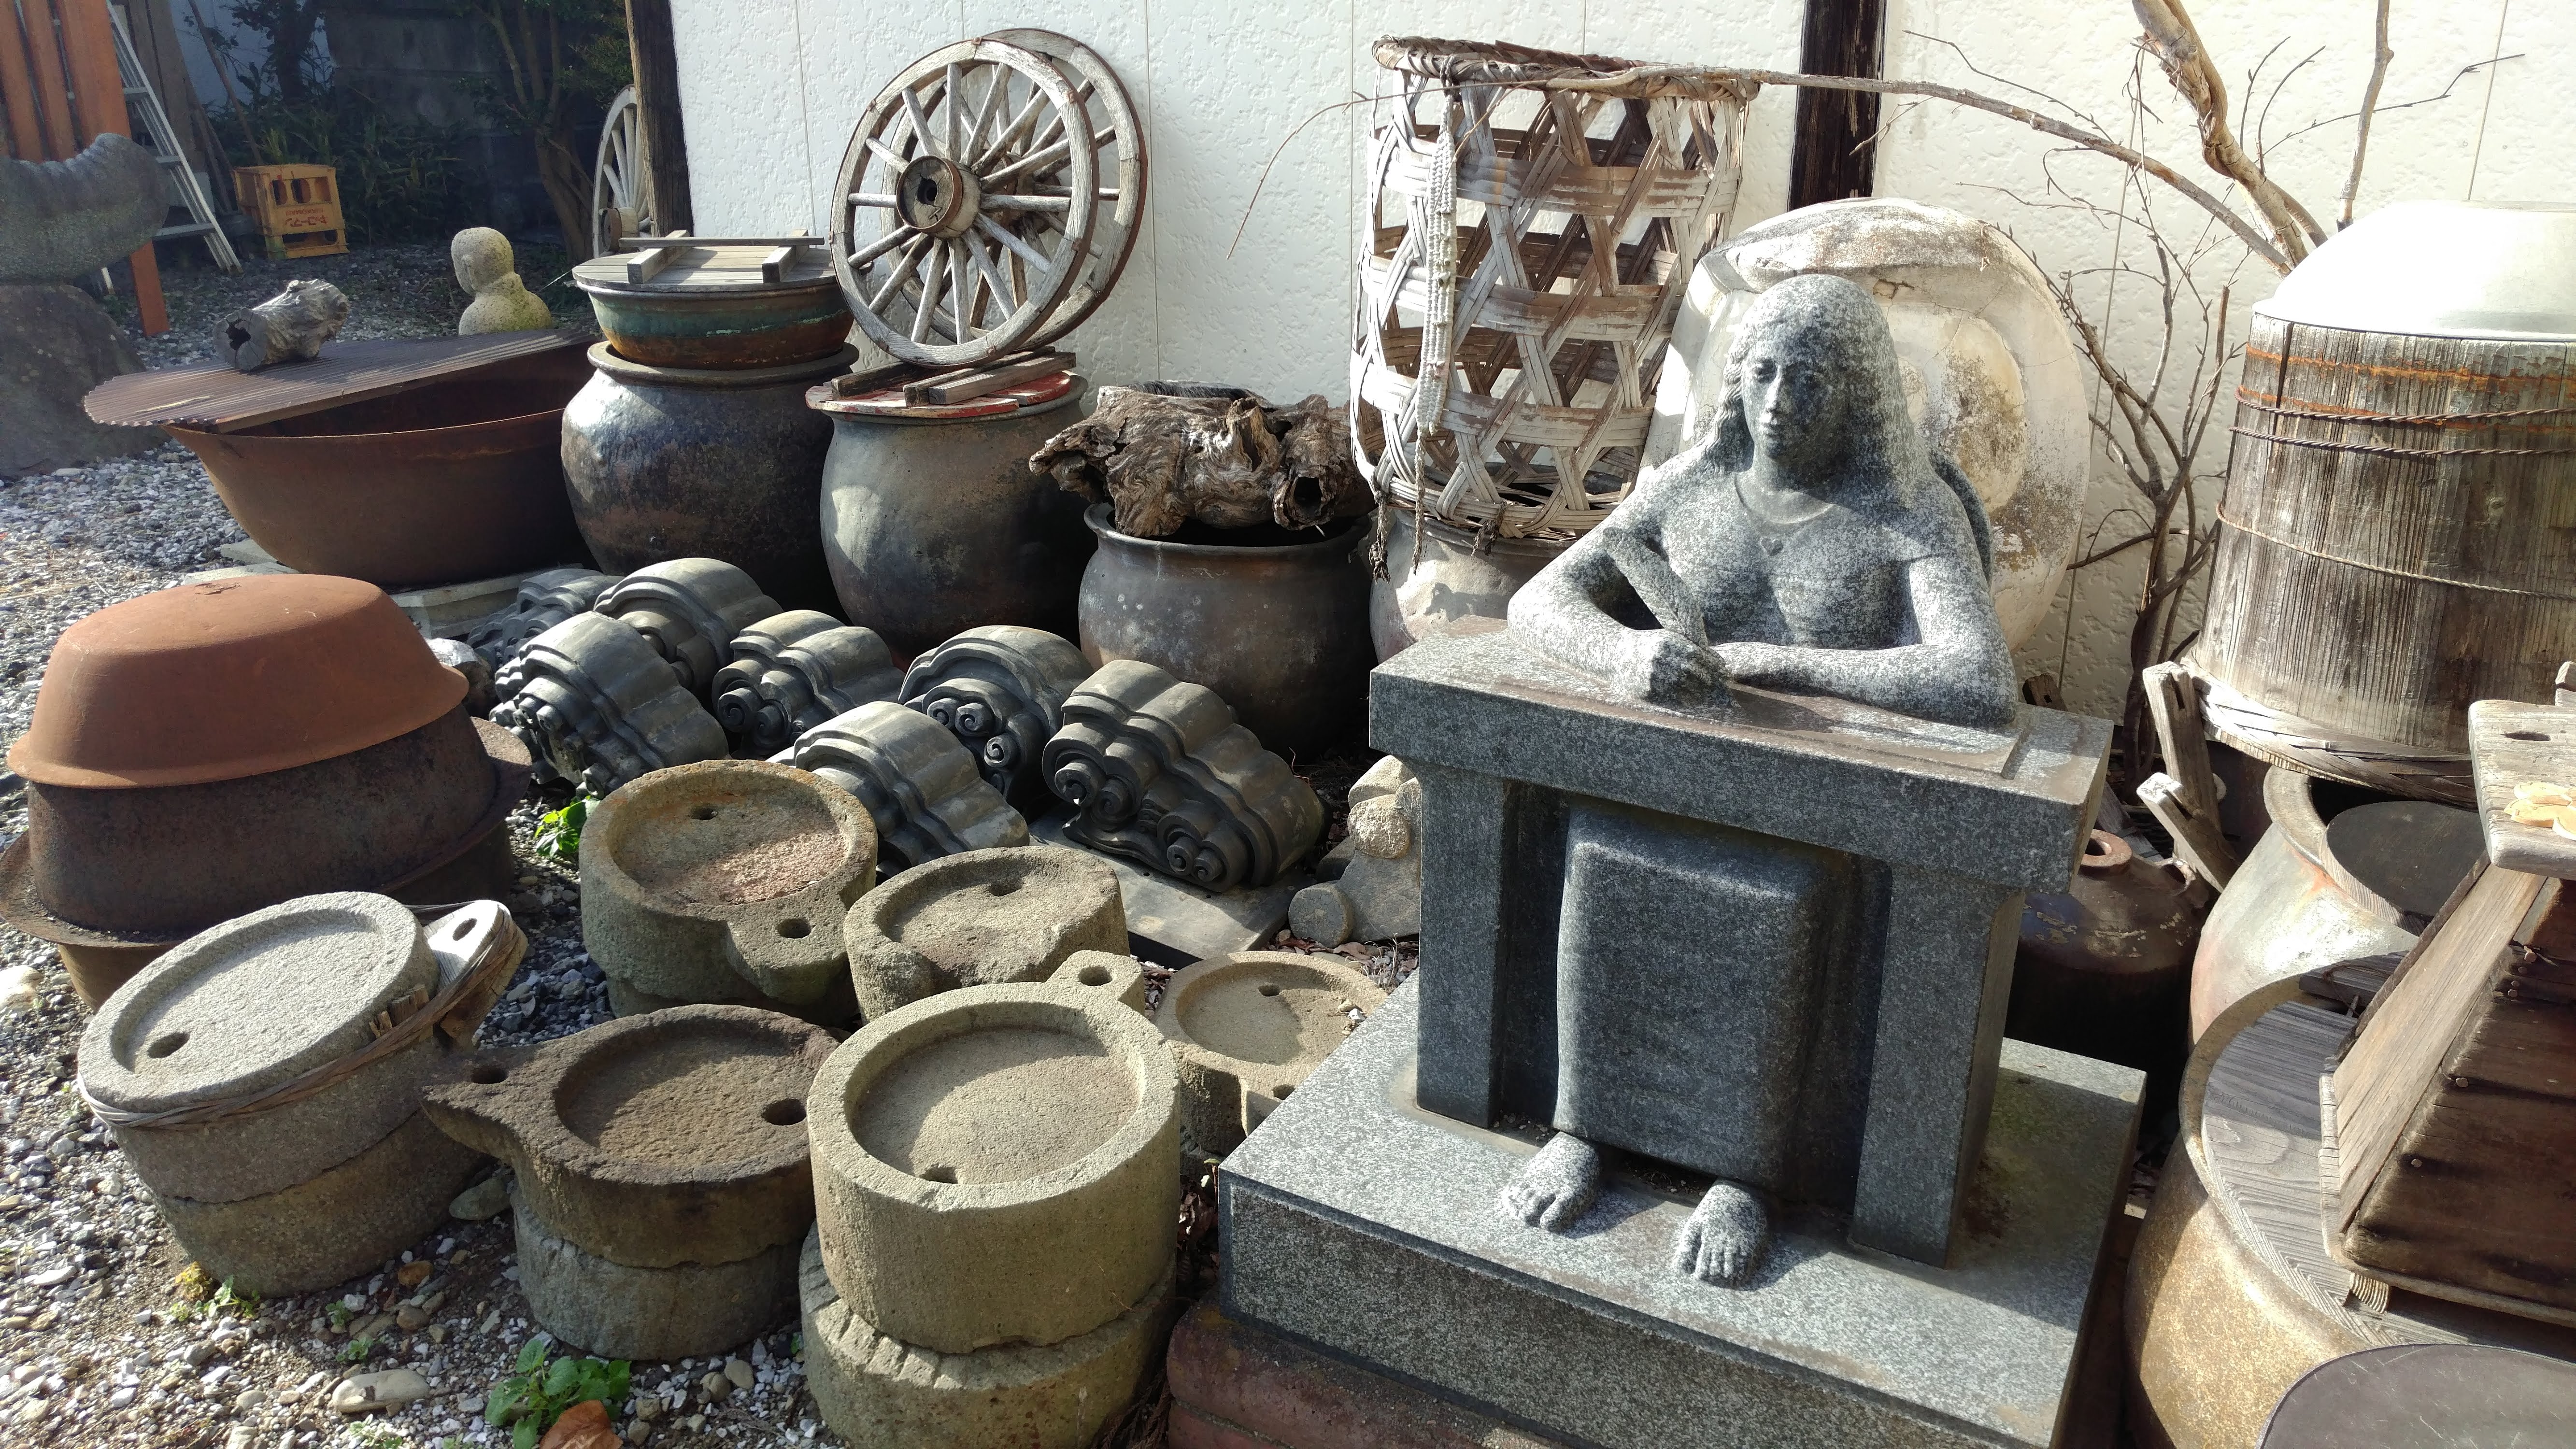 various ceramic pots and decorative items